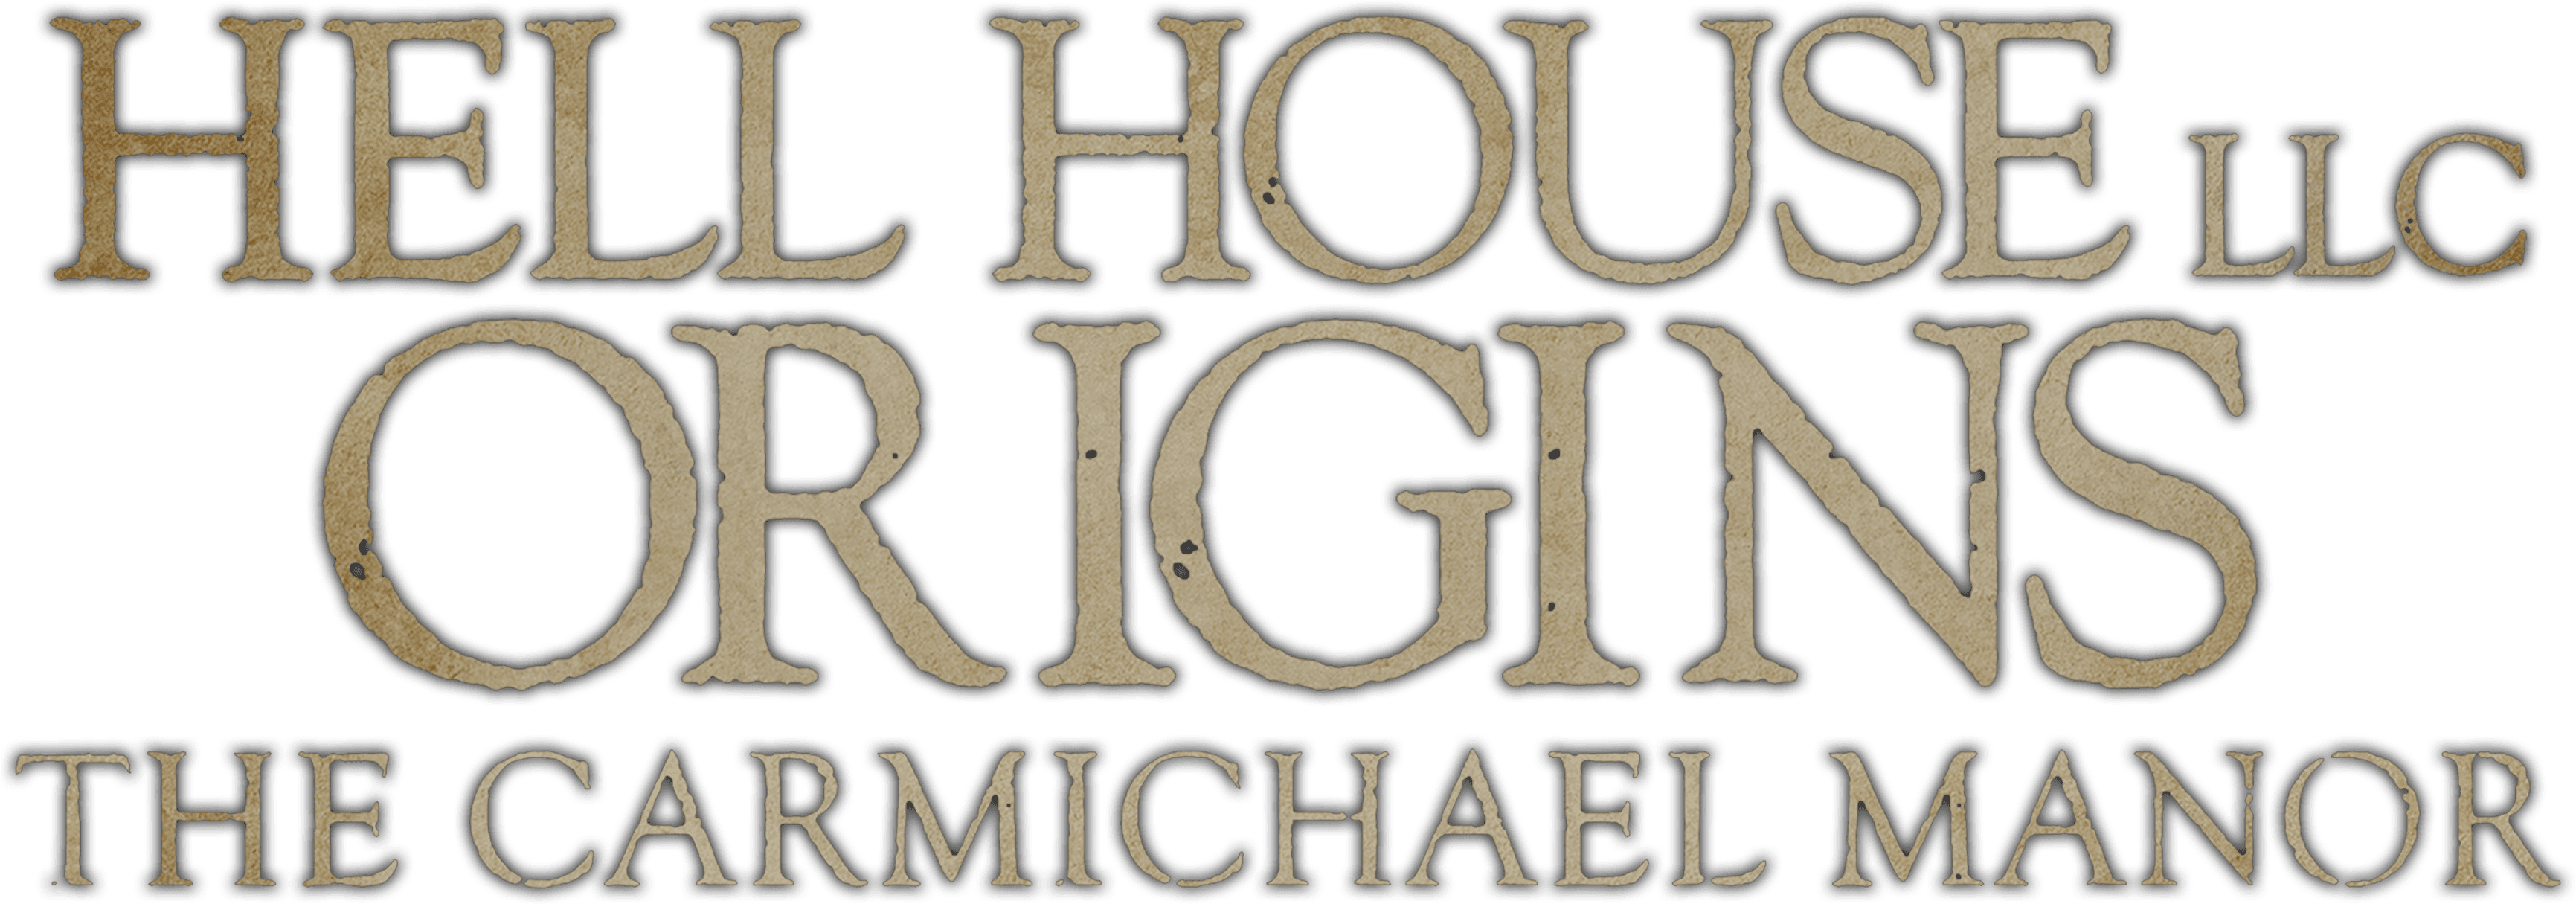 Hell House LLC Origins: The Carmichael Manor logo